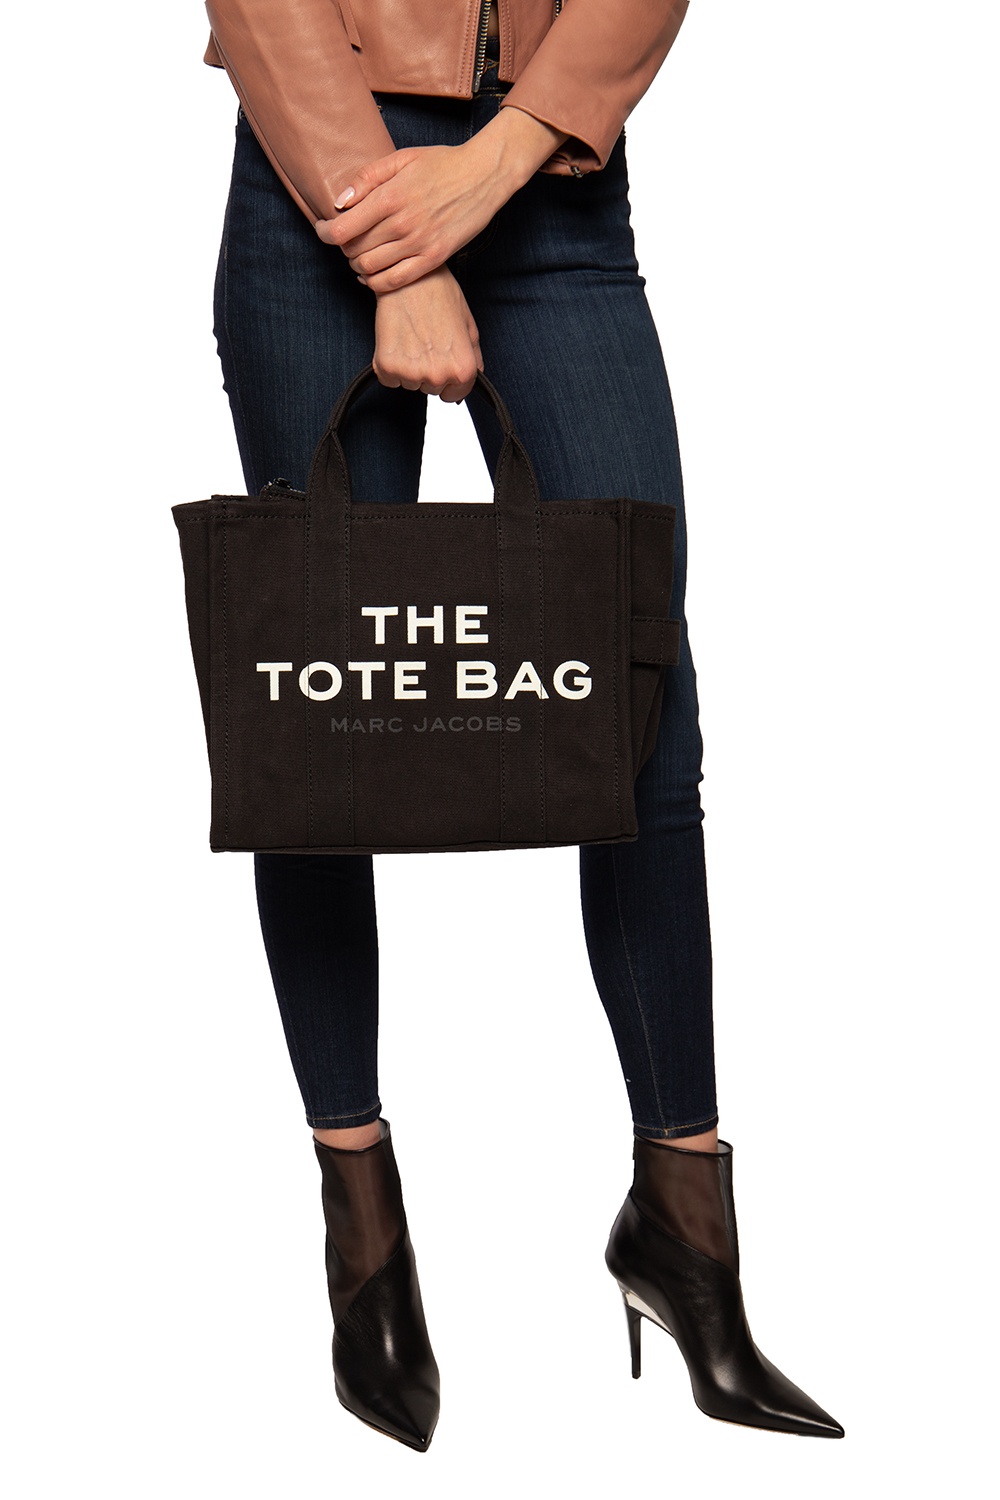 The Traveler Tote' bag Marc Jacobs (The) - Vitkac Singapore